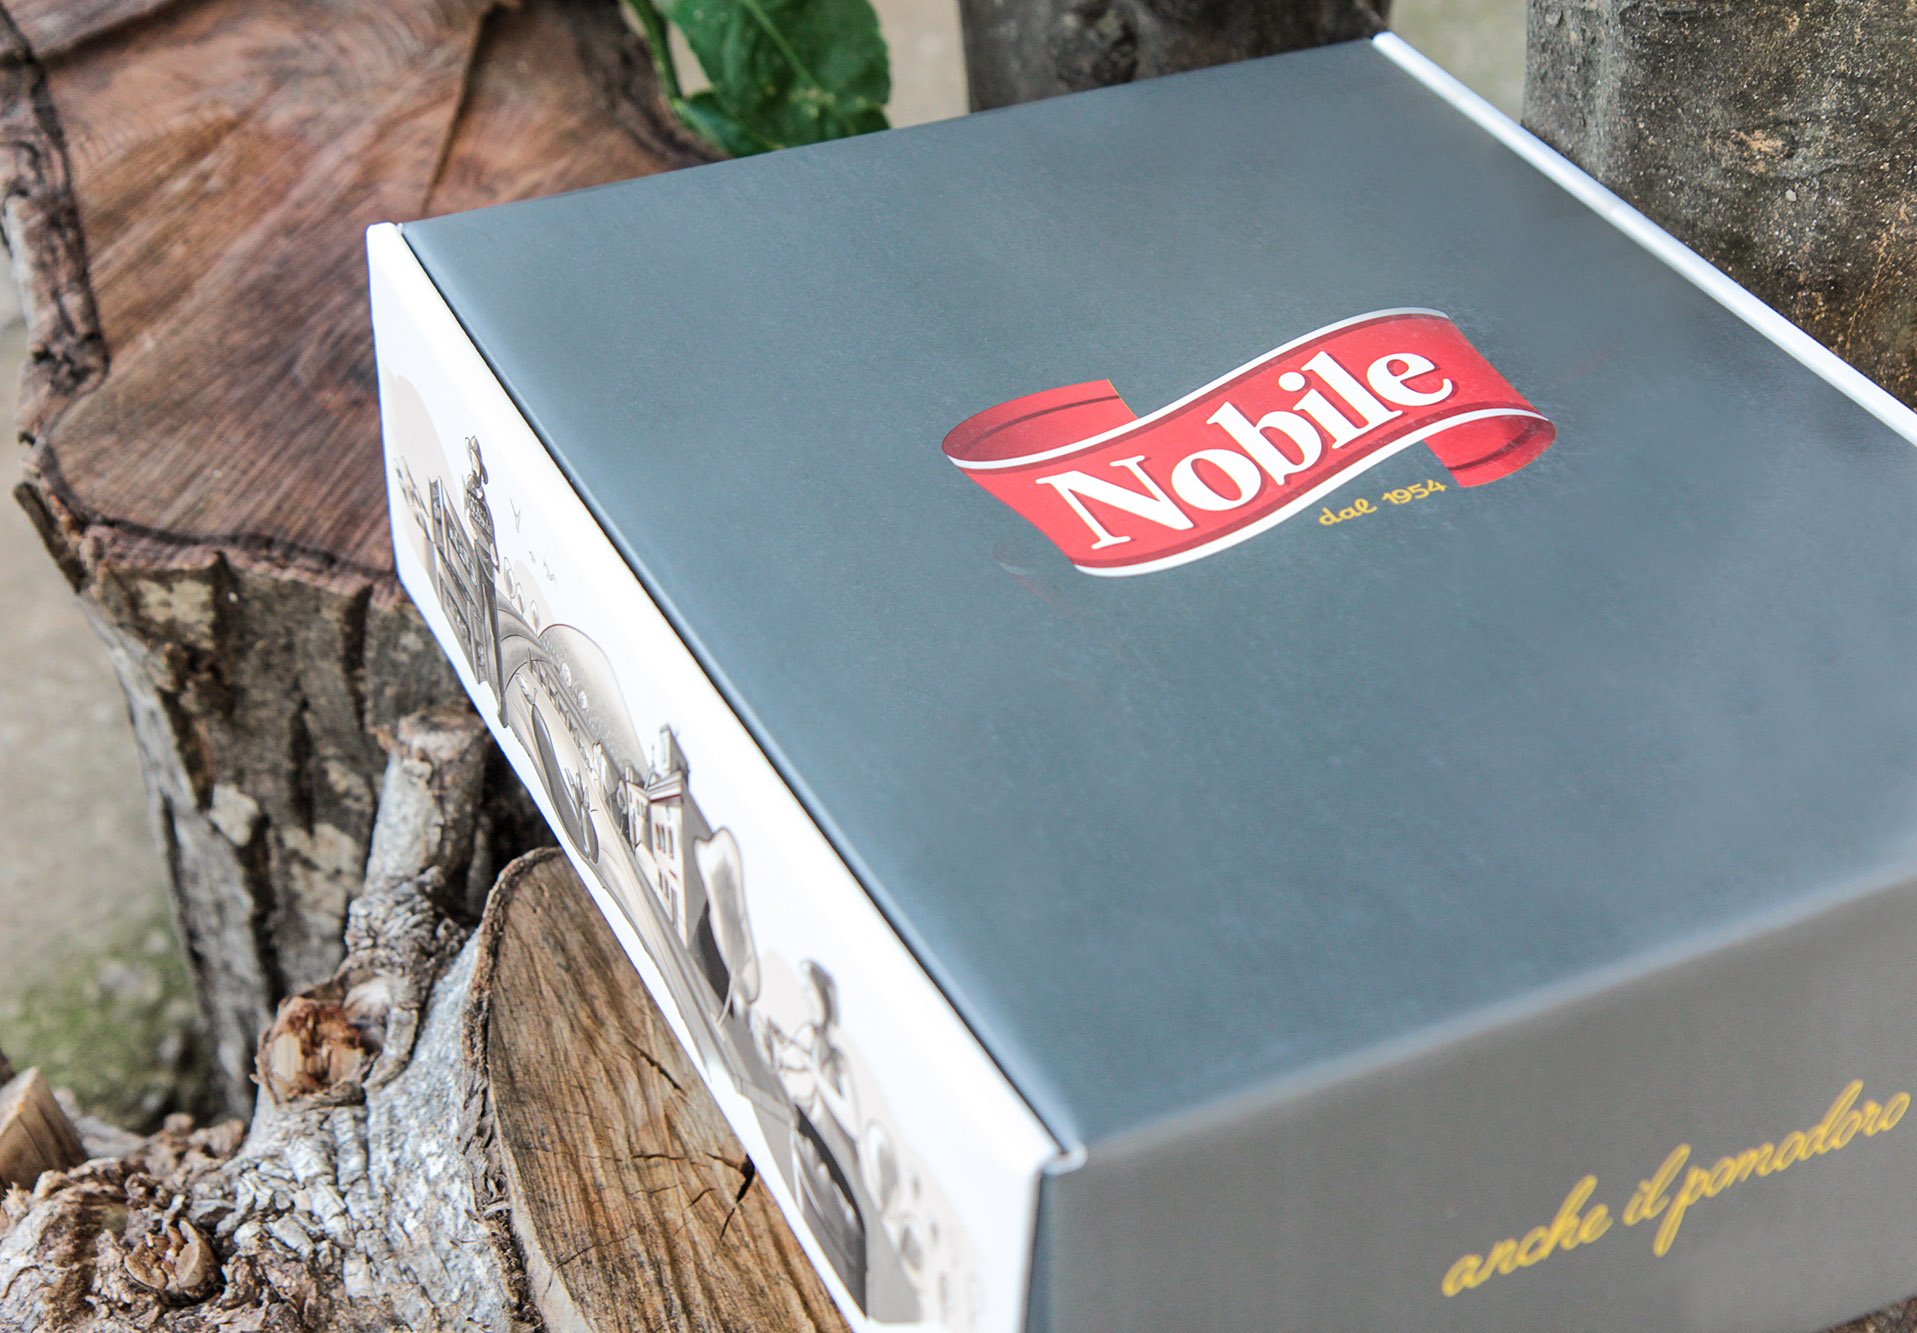 Famiglia Nobile - food packaging design